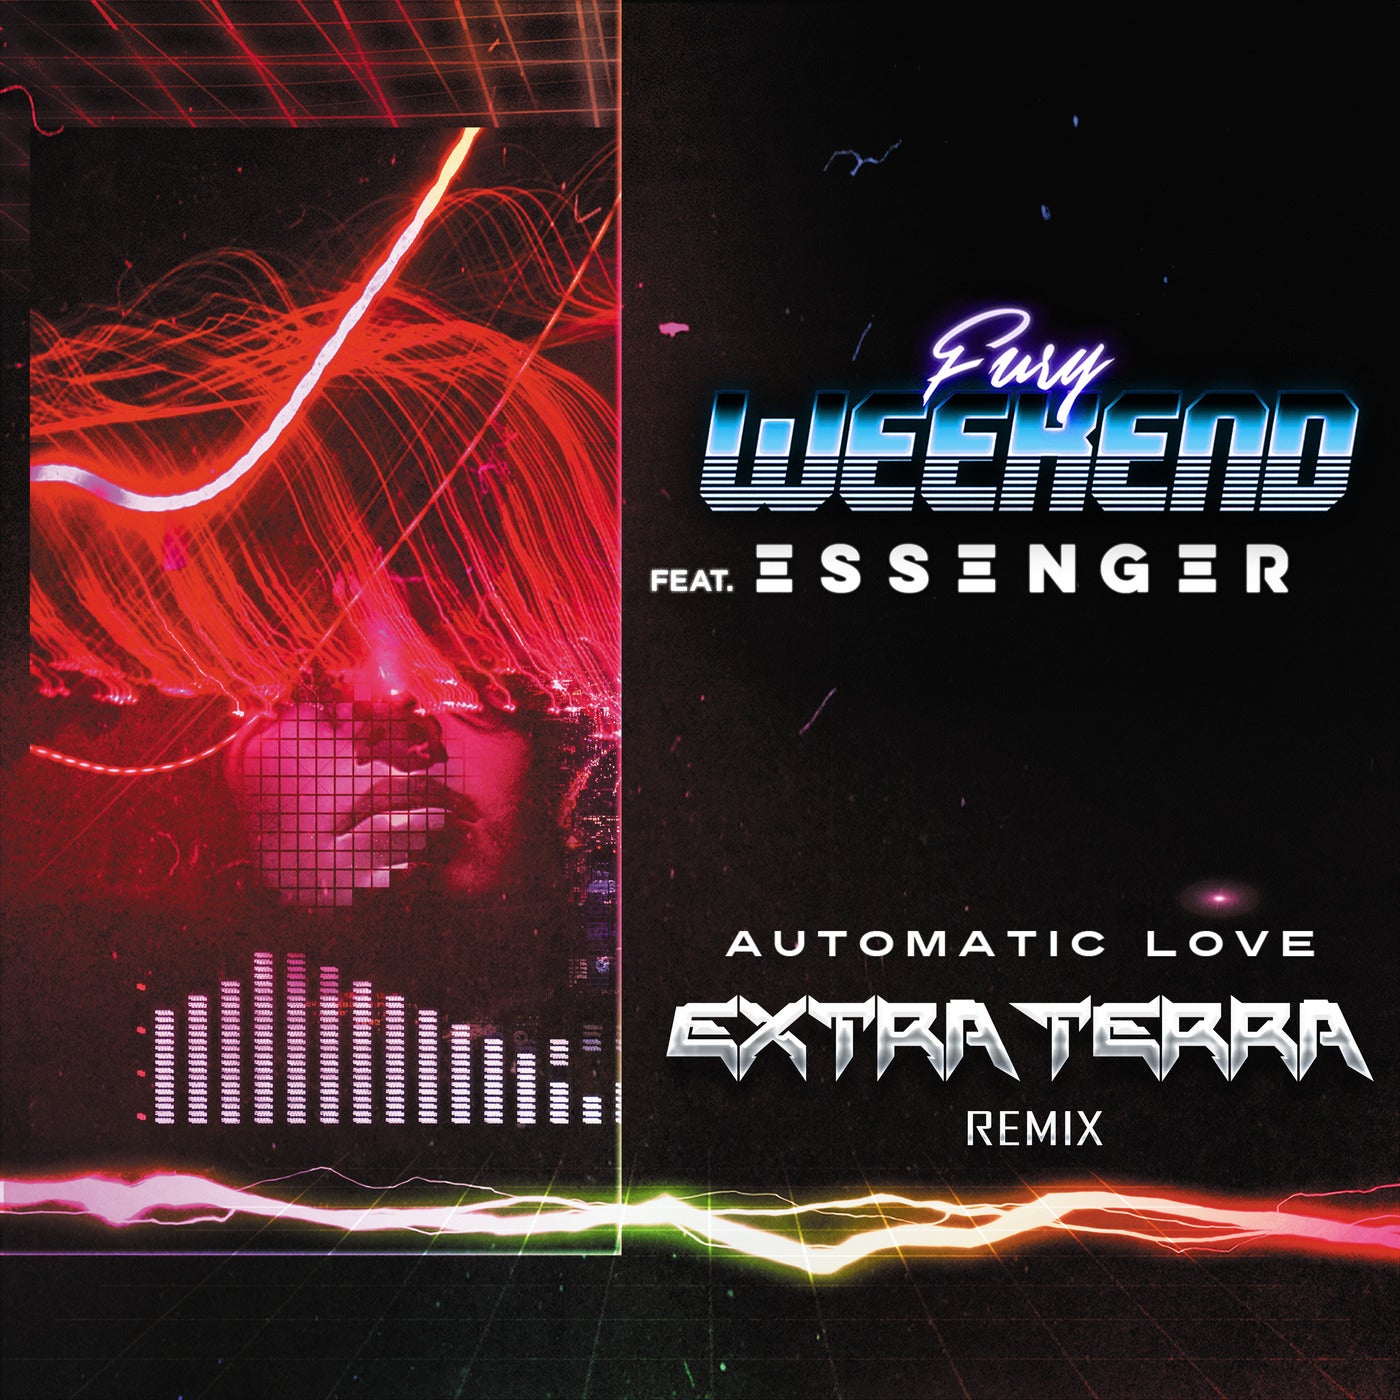 Automatic Love - Extra Terra Remix